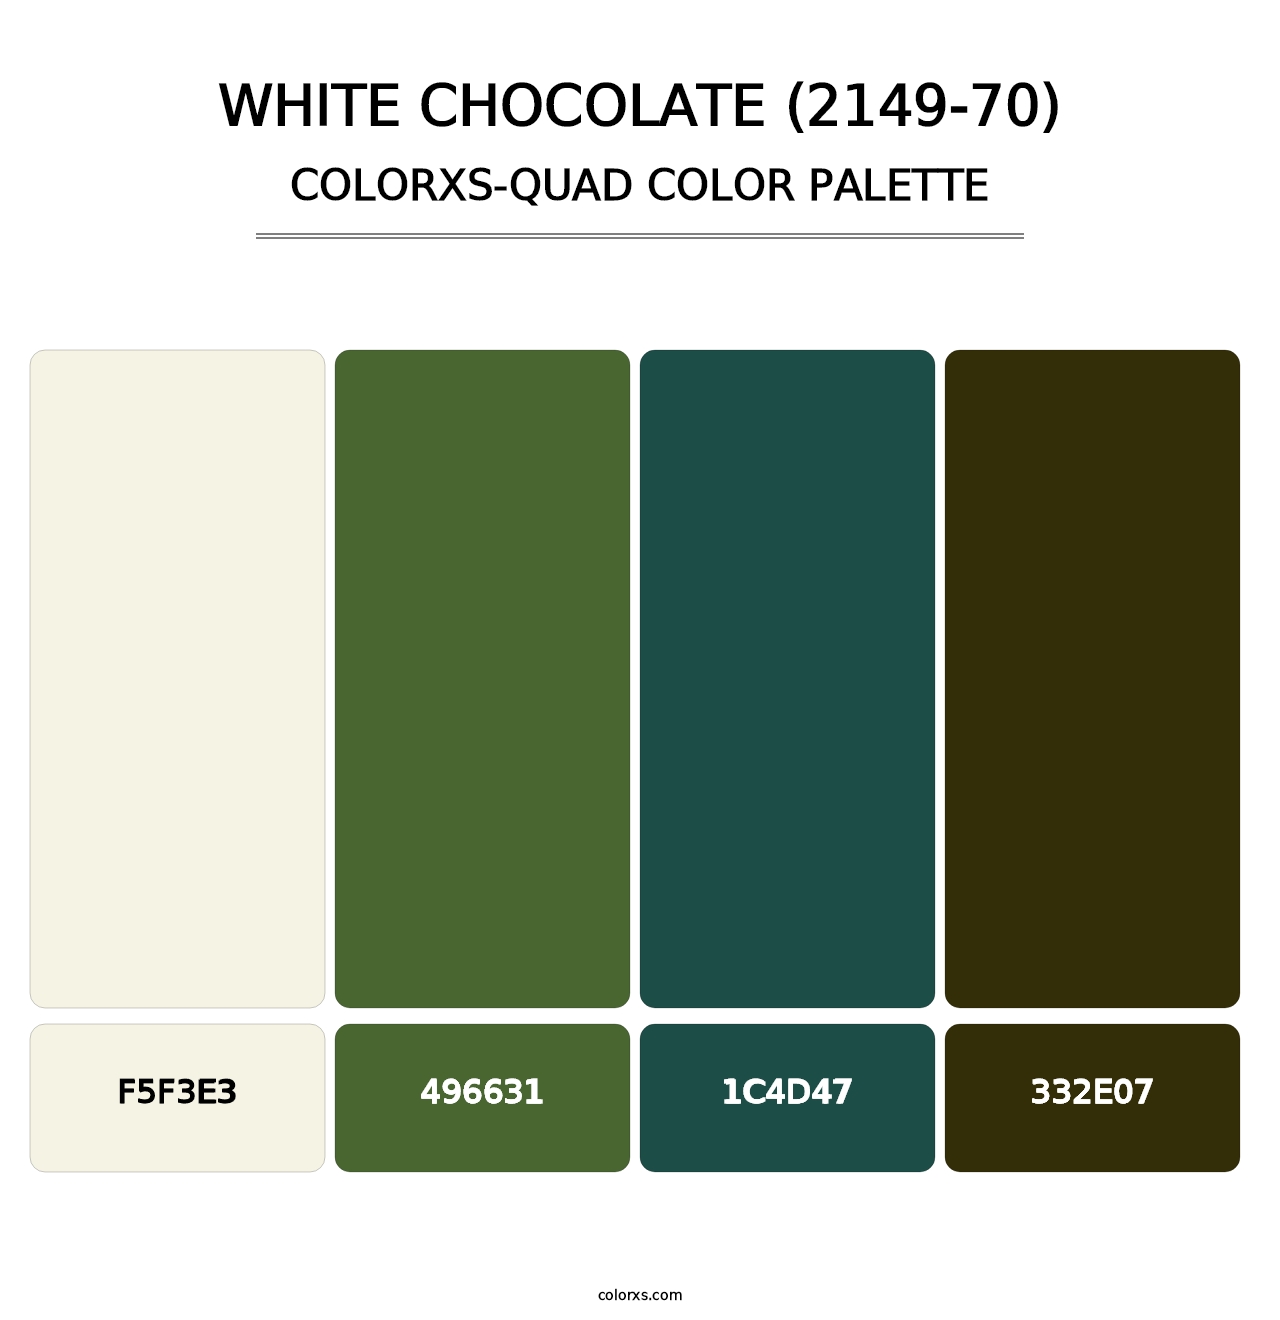 White Chocolate (2149-70) - Colorxs Quad Palette